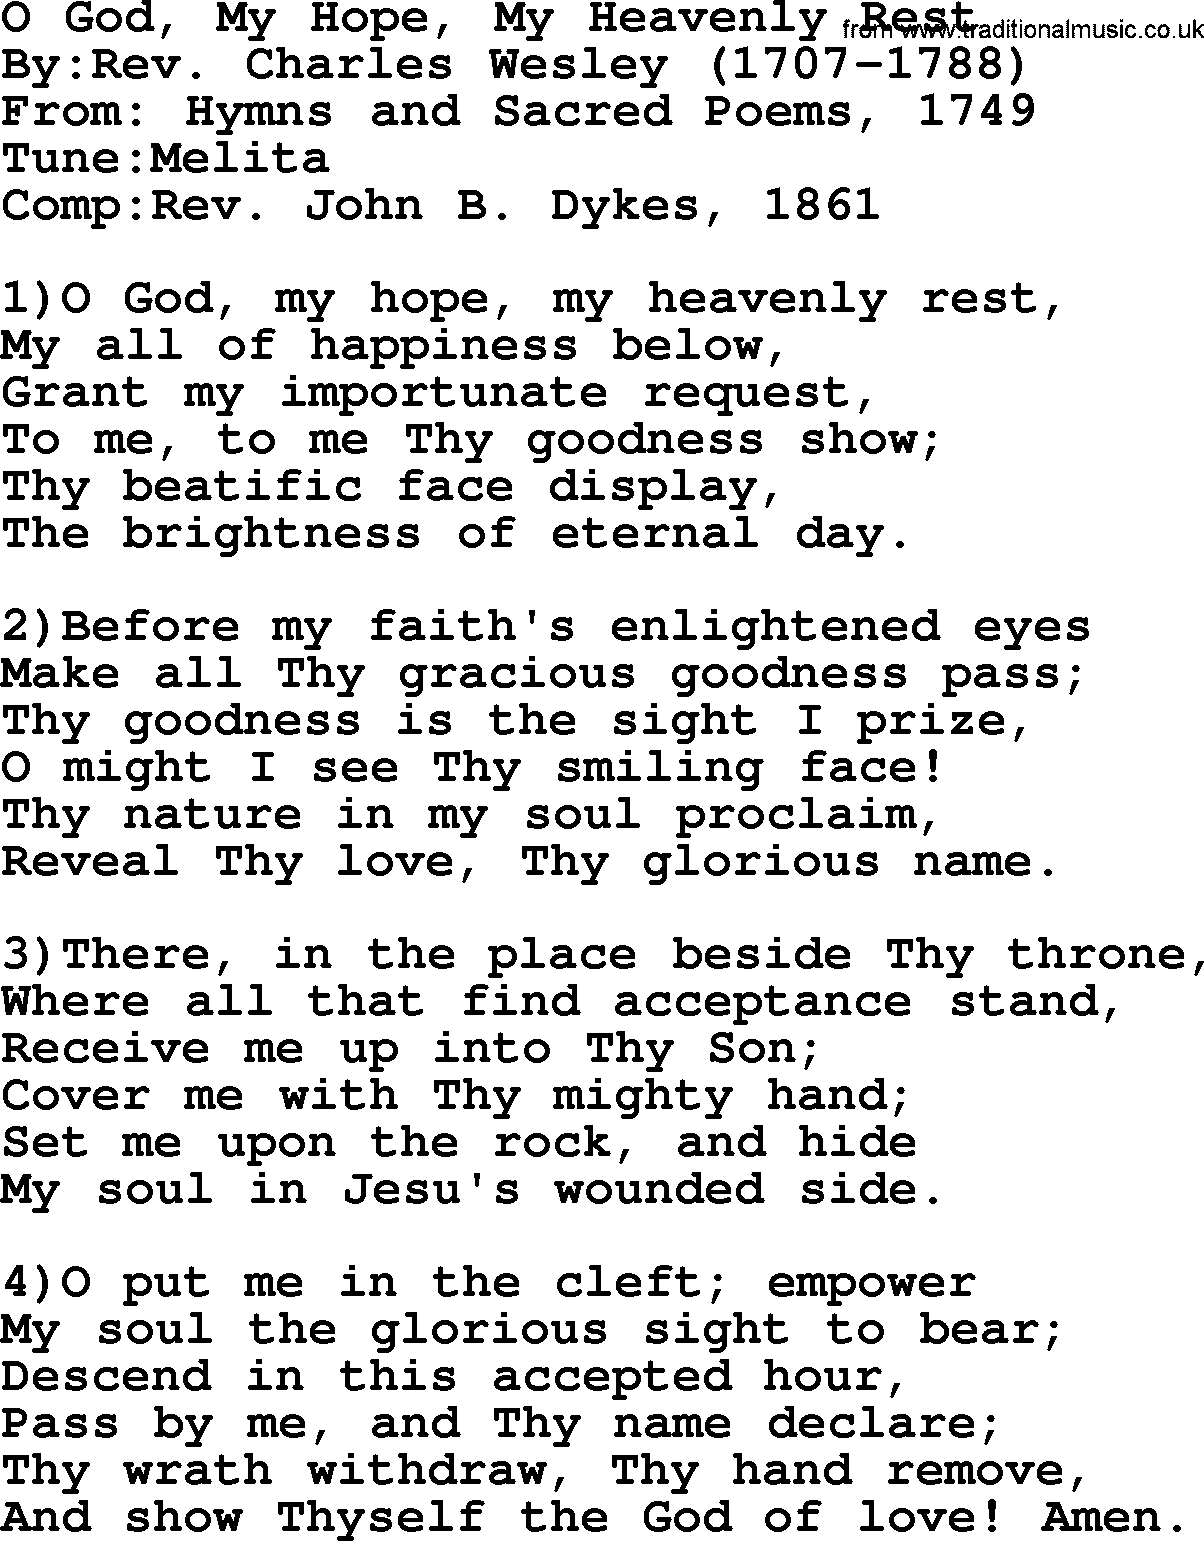 Methodist Hymn: O God, My Hope, My Heavenly Rest, lyrics